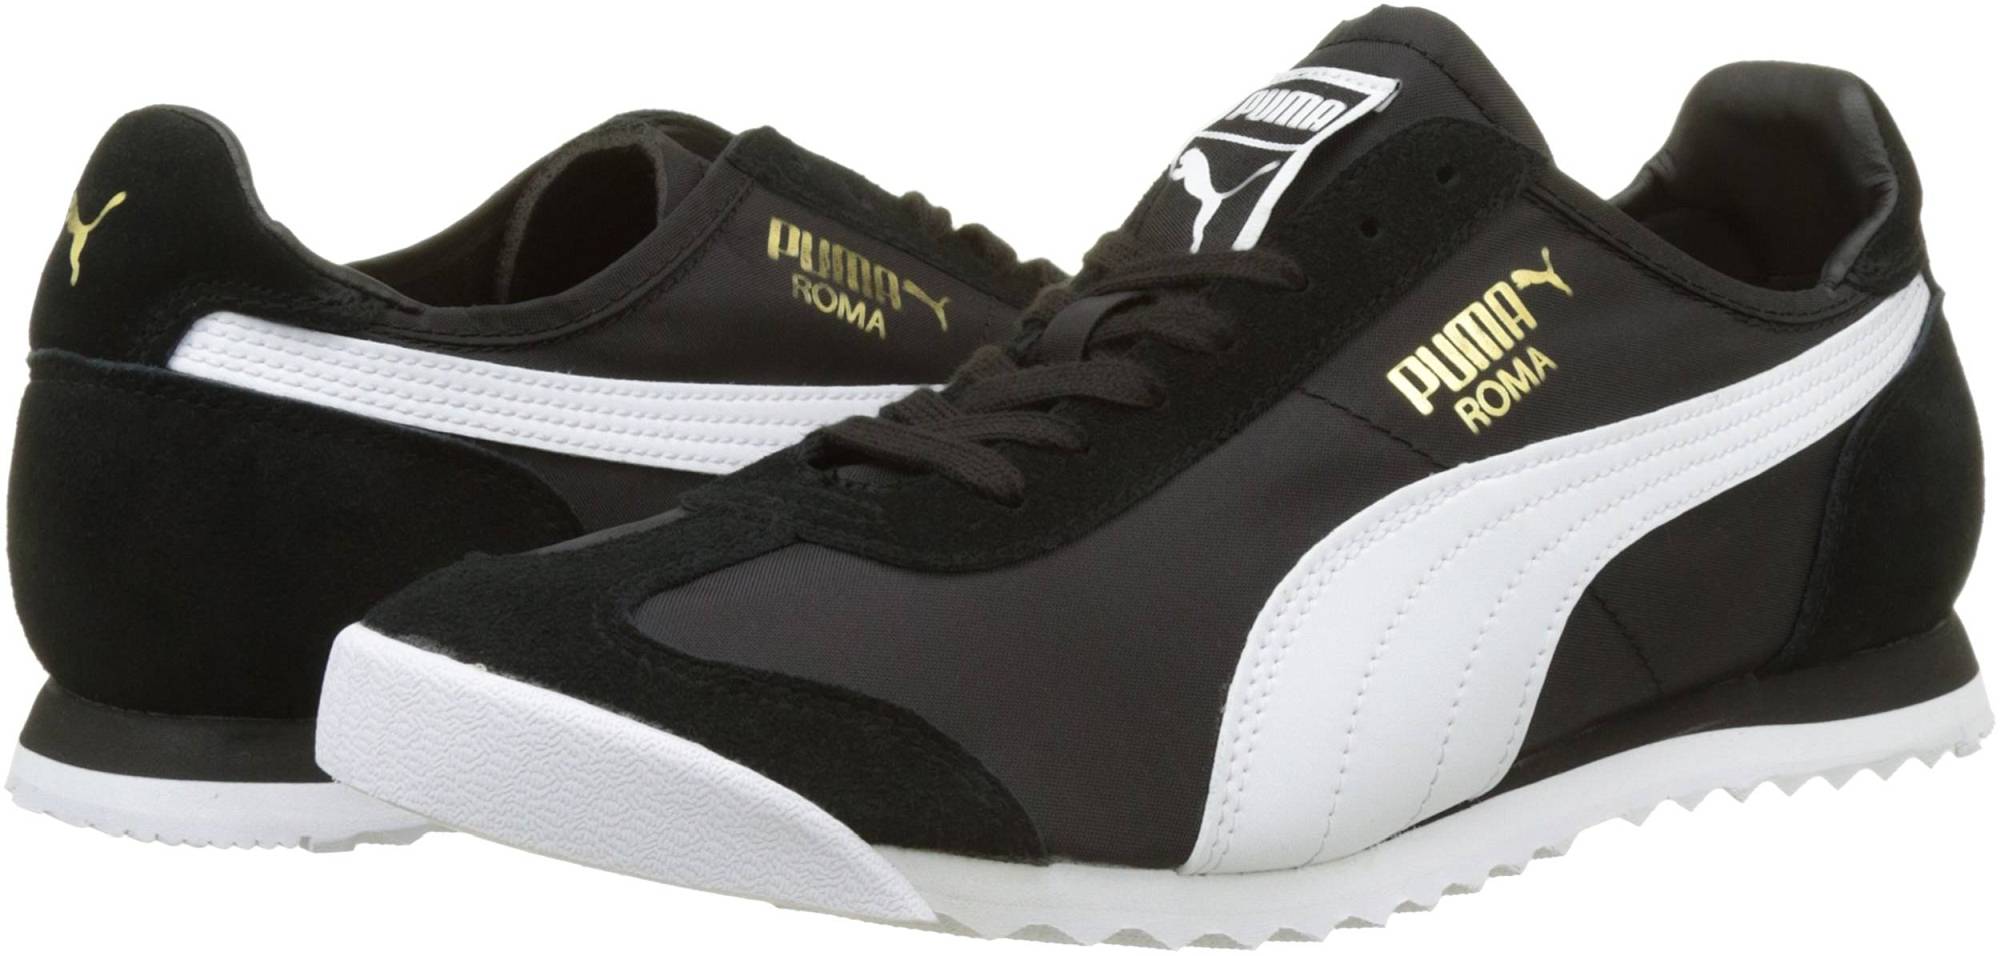 Puma Roma OG Nylon – Shoes Reviews & Reasons To Buy